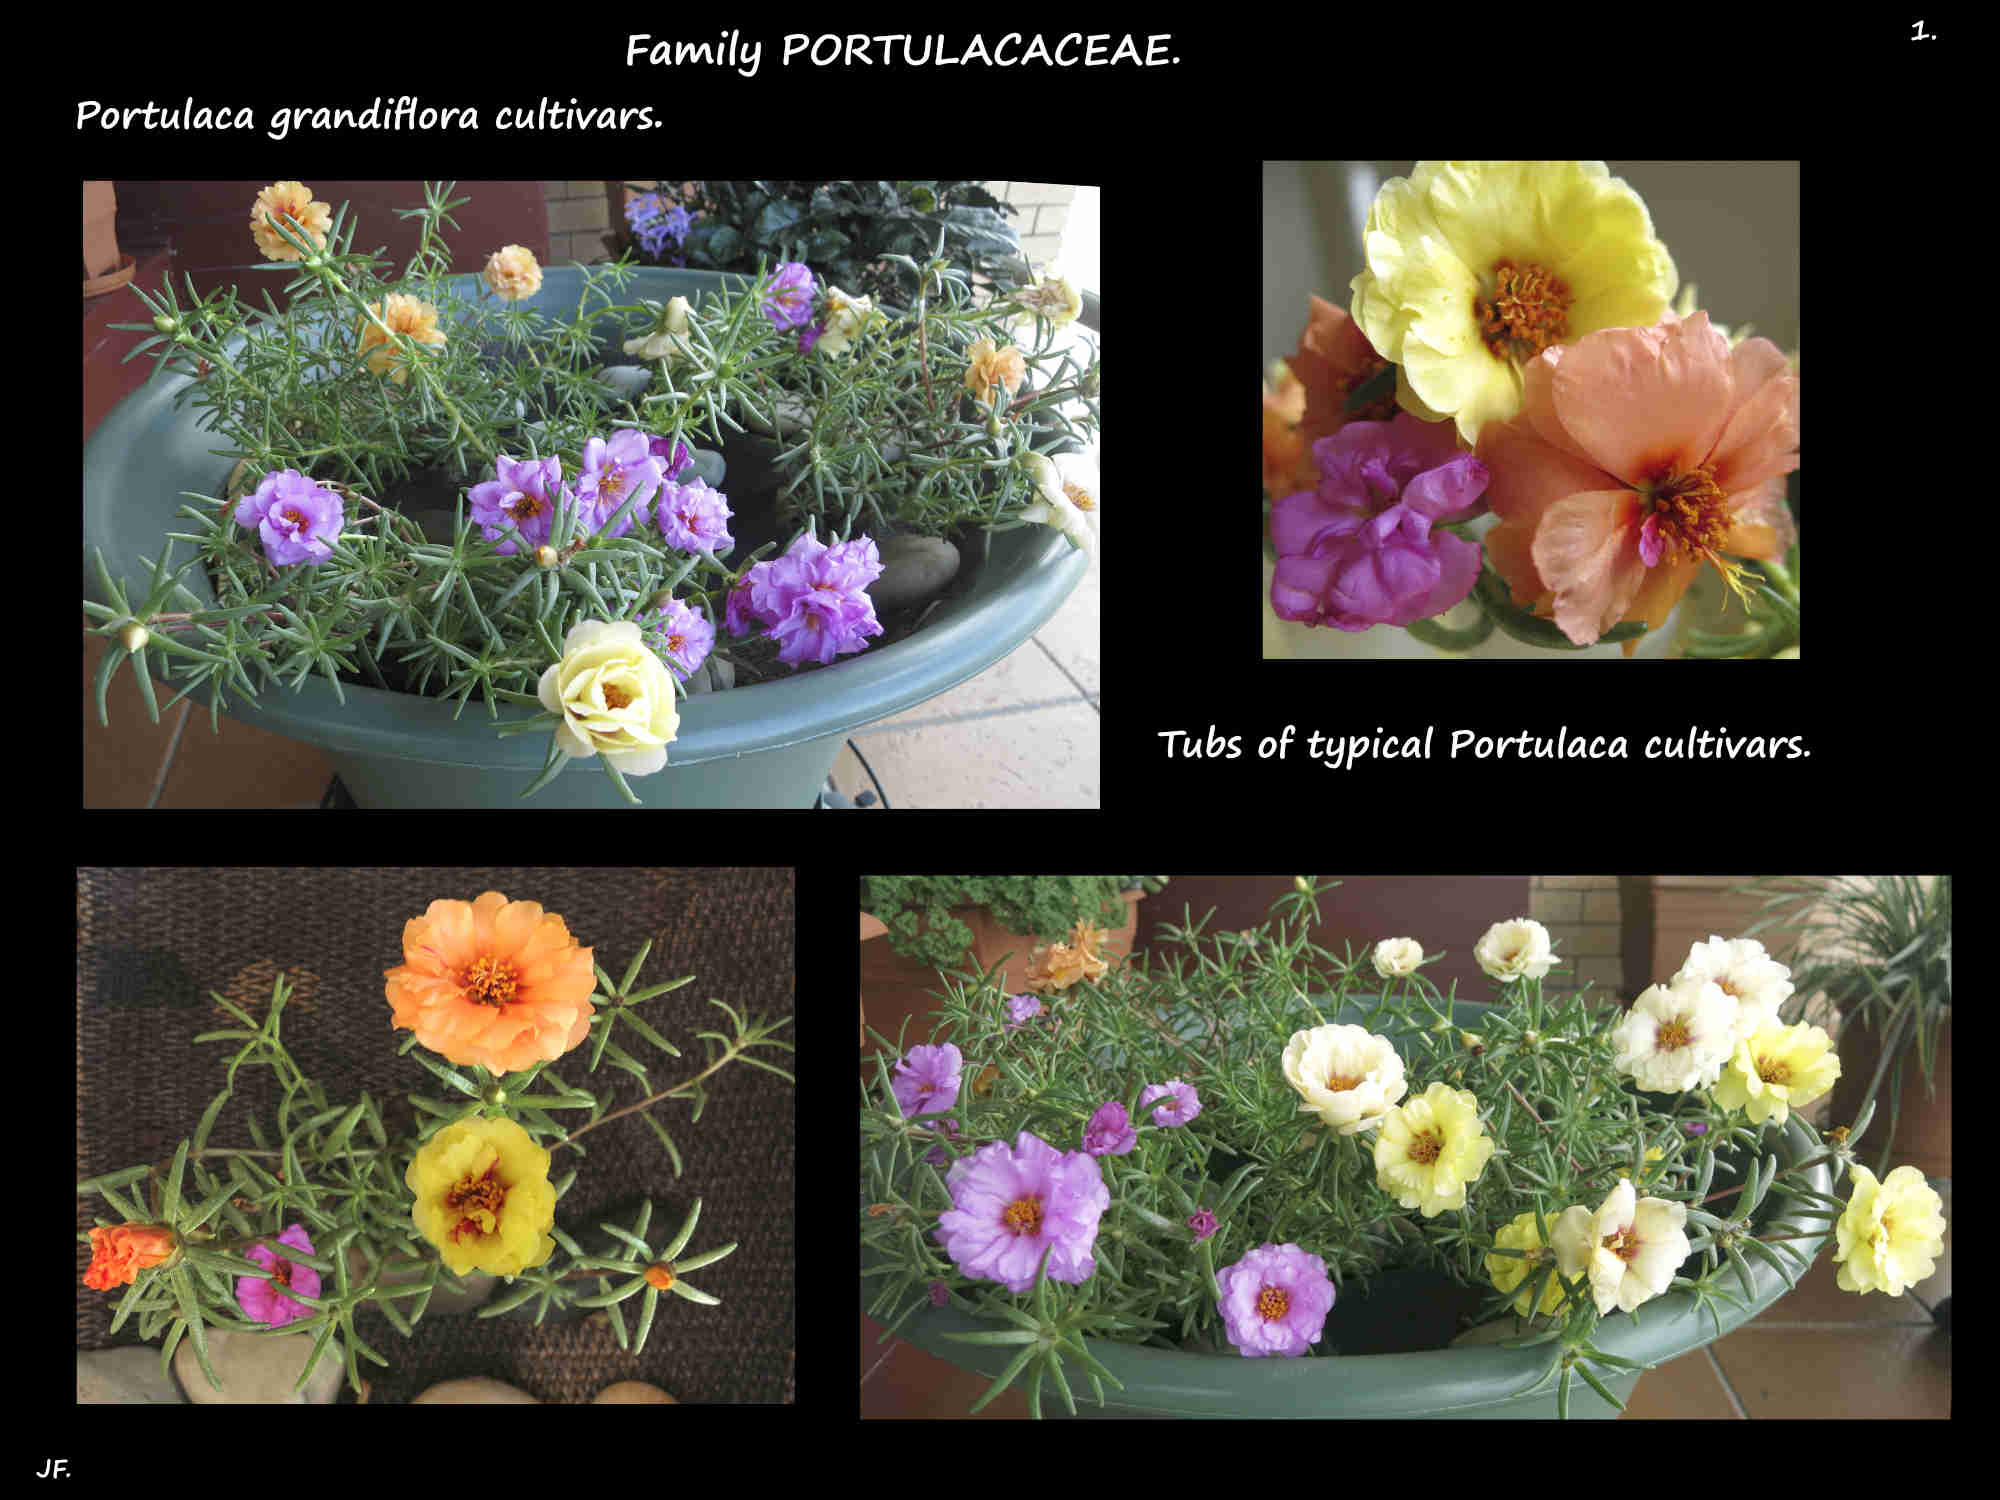 2 Tubs of mixed Portulaca grandiflora cultivars